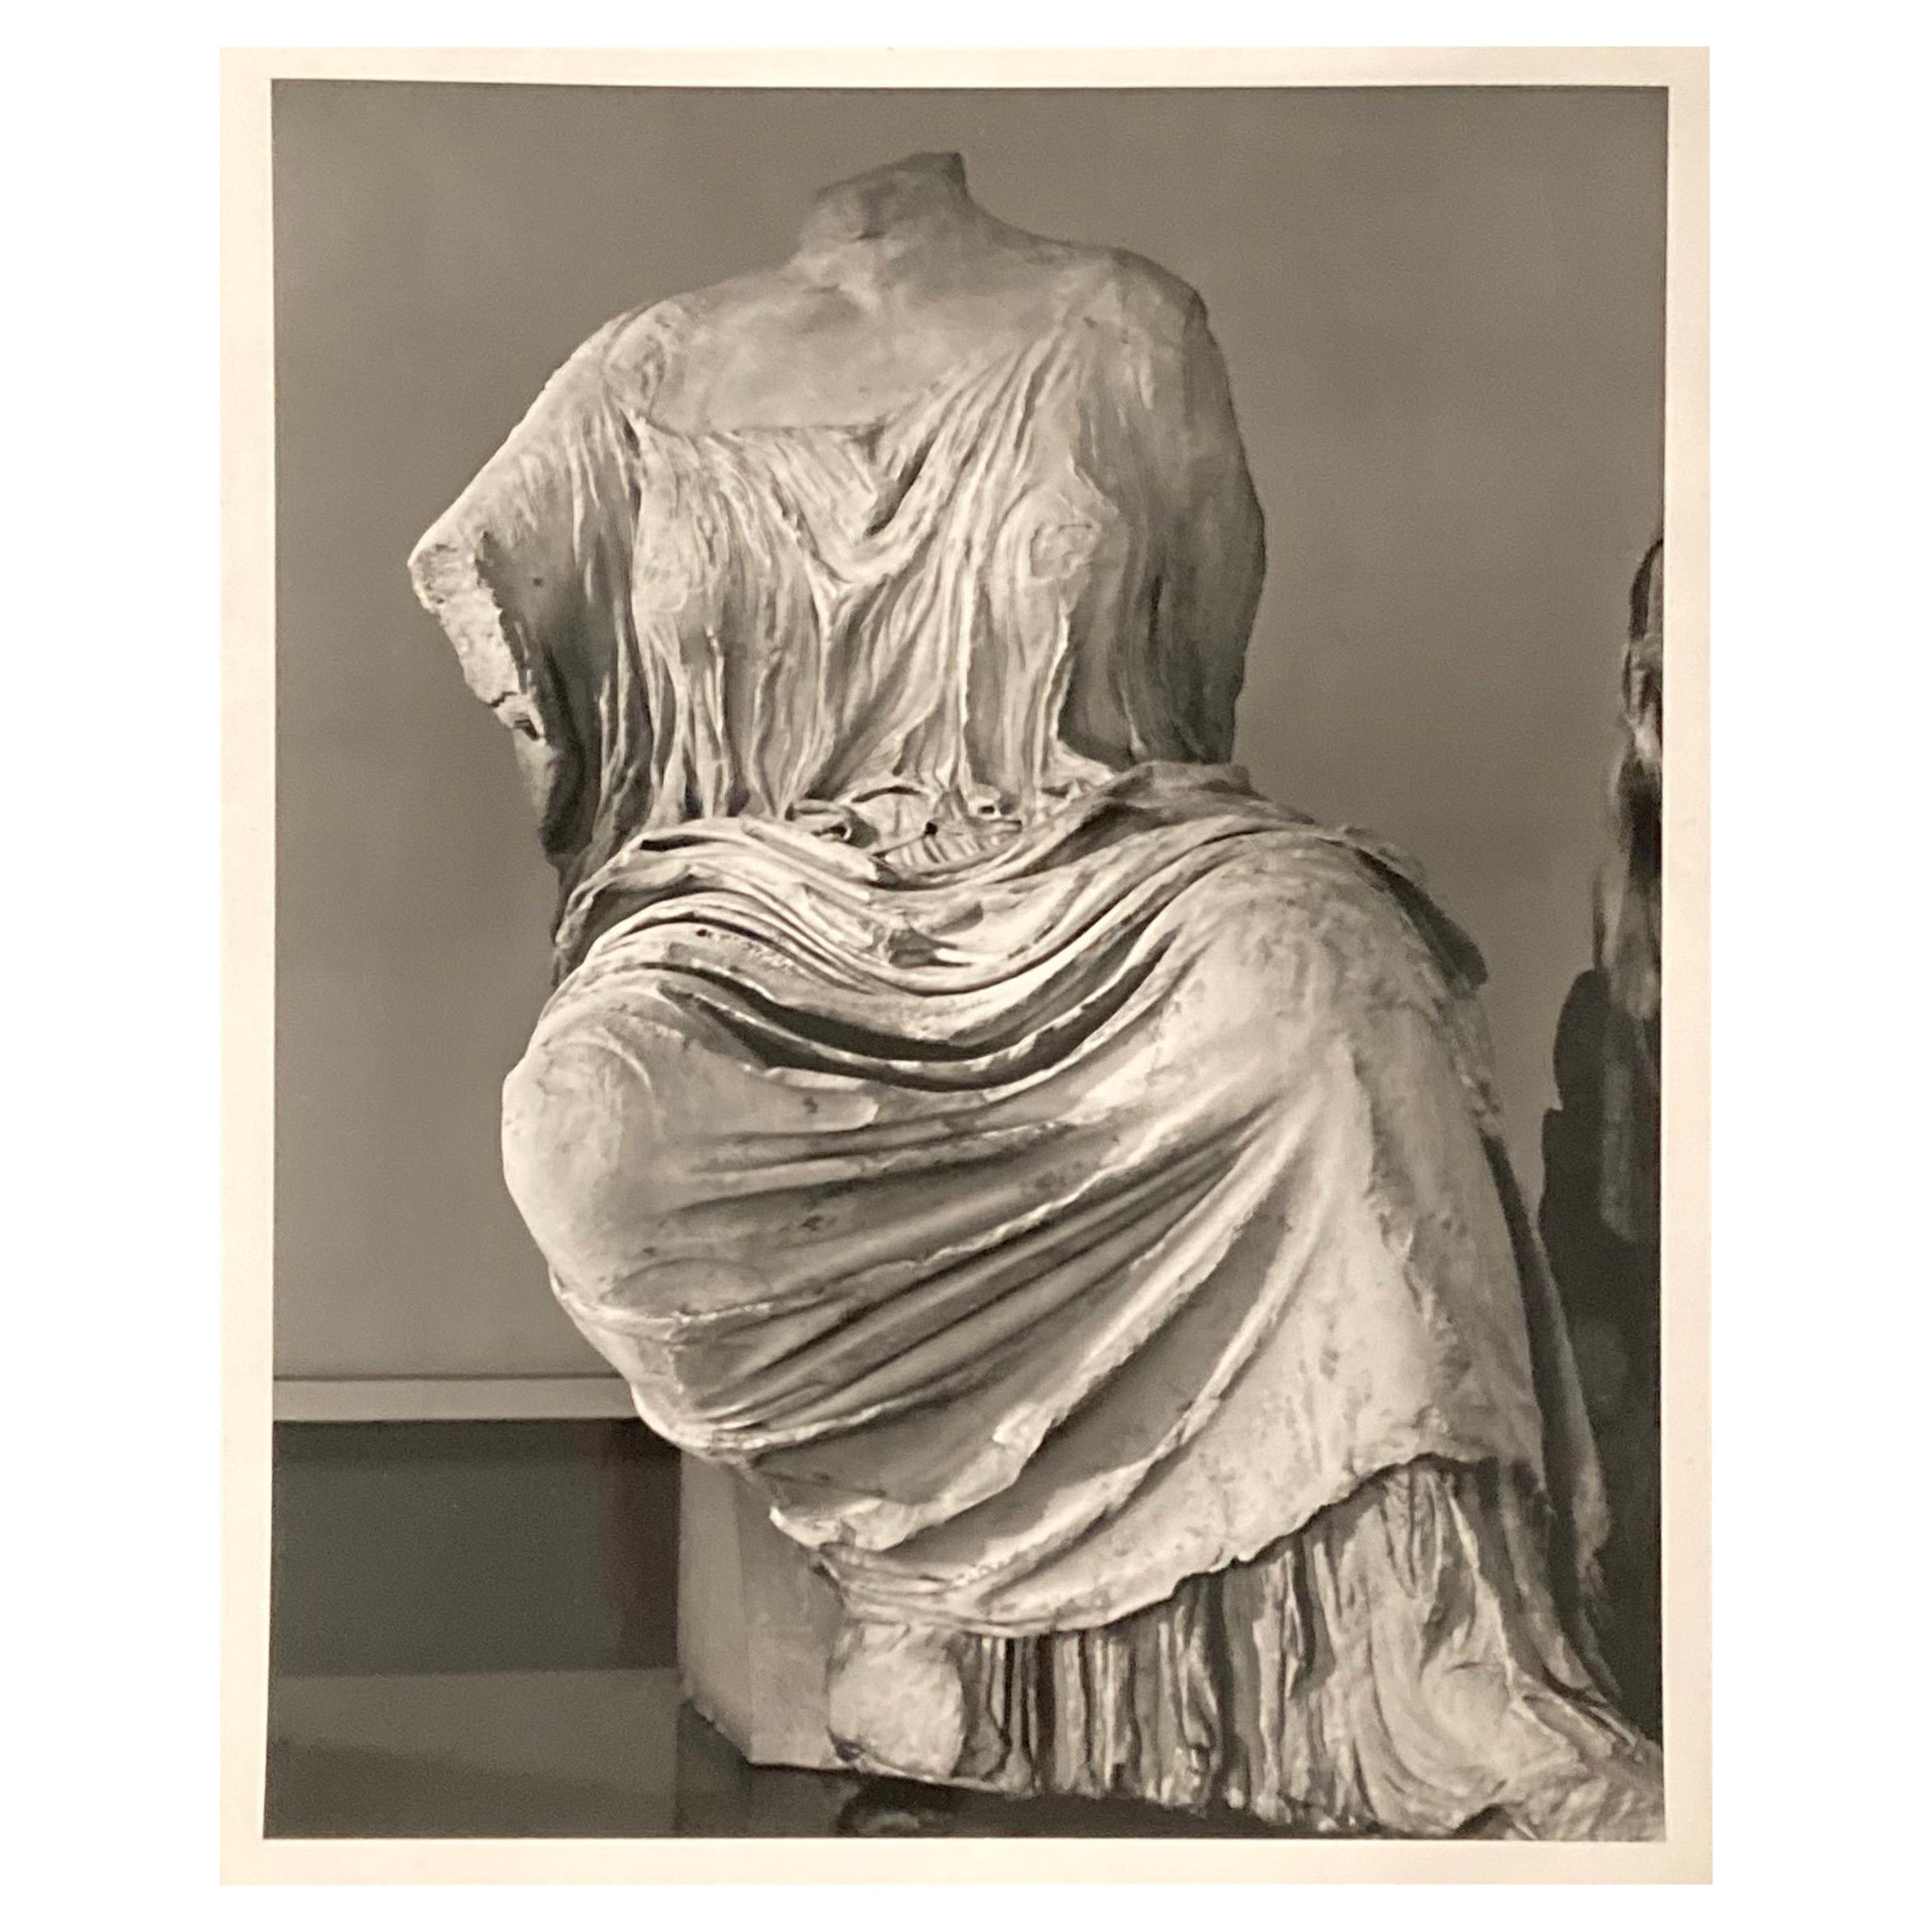 F. L. Kennett, "Parthenon Marble", original 1950s black and white photograph